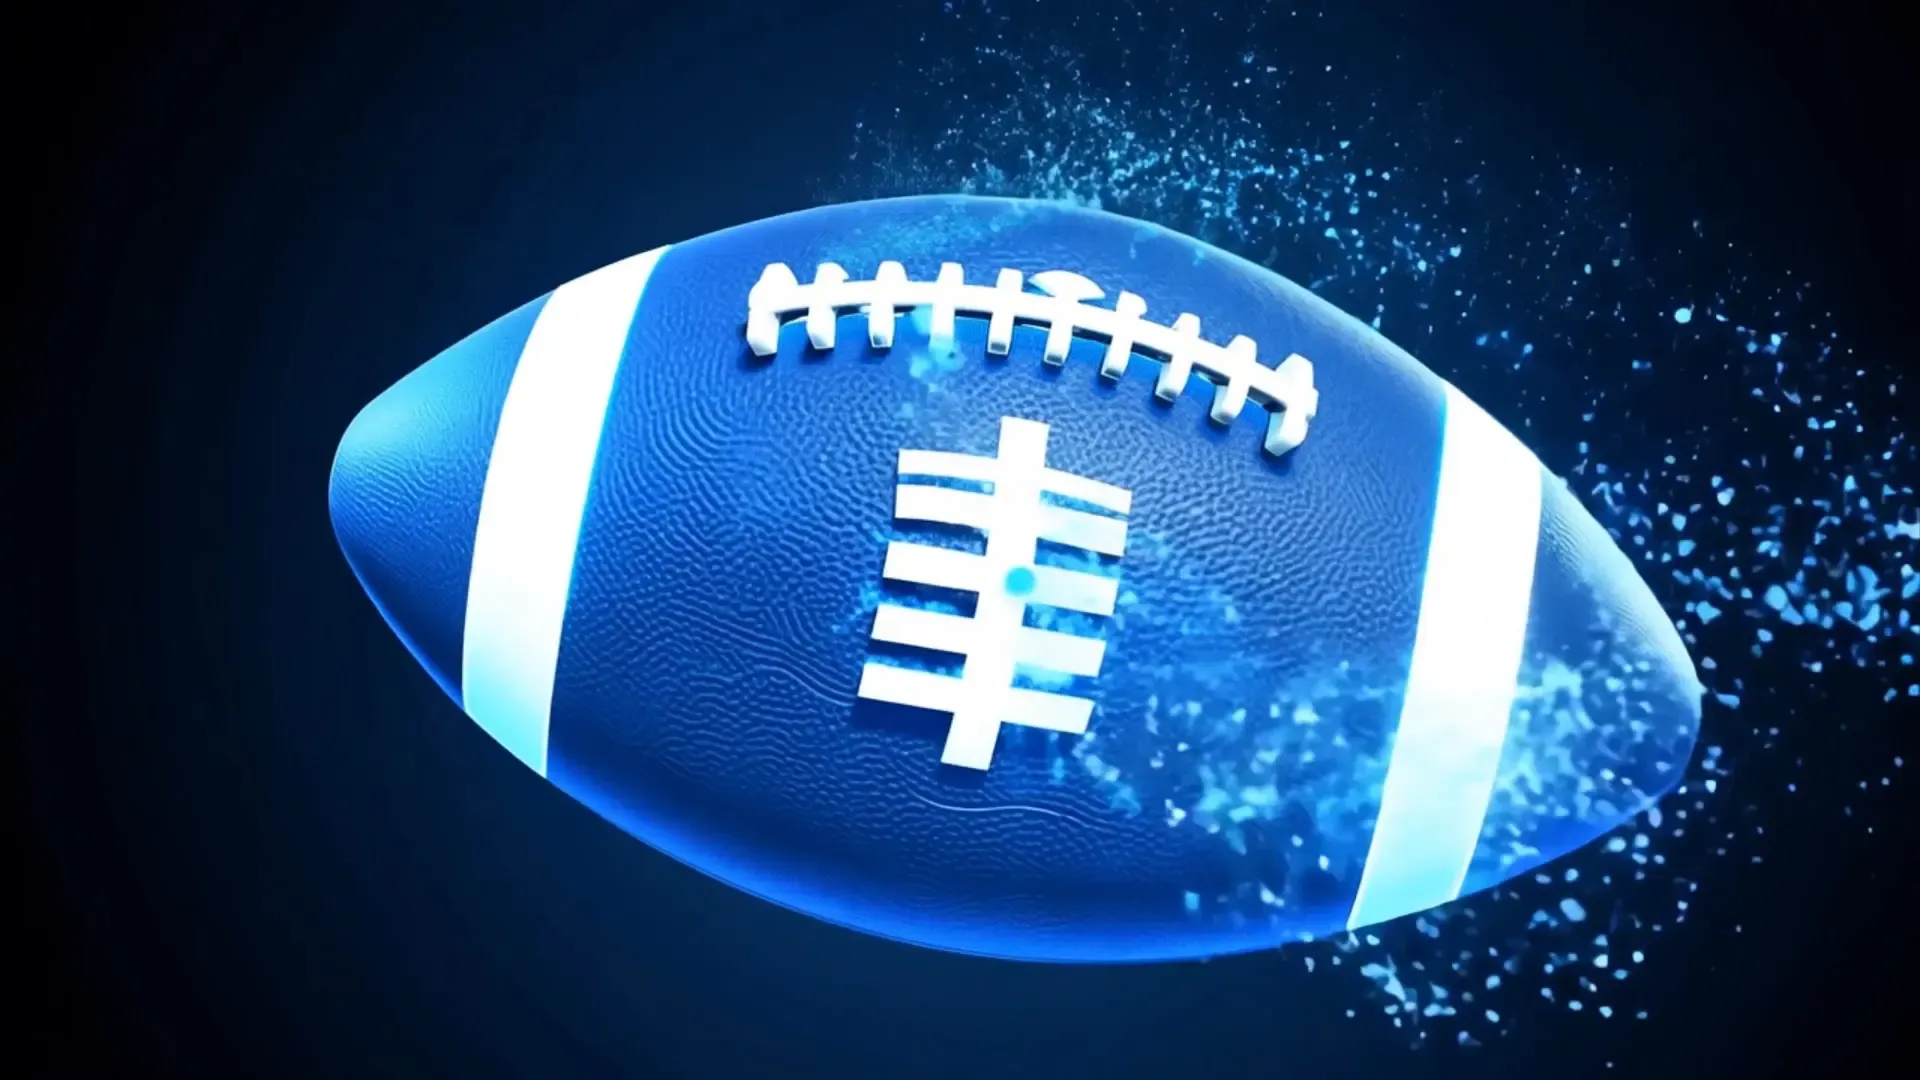 Blue Football Burst Background for Energetic Sports Logo Reveals